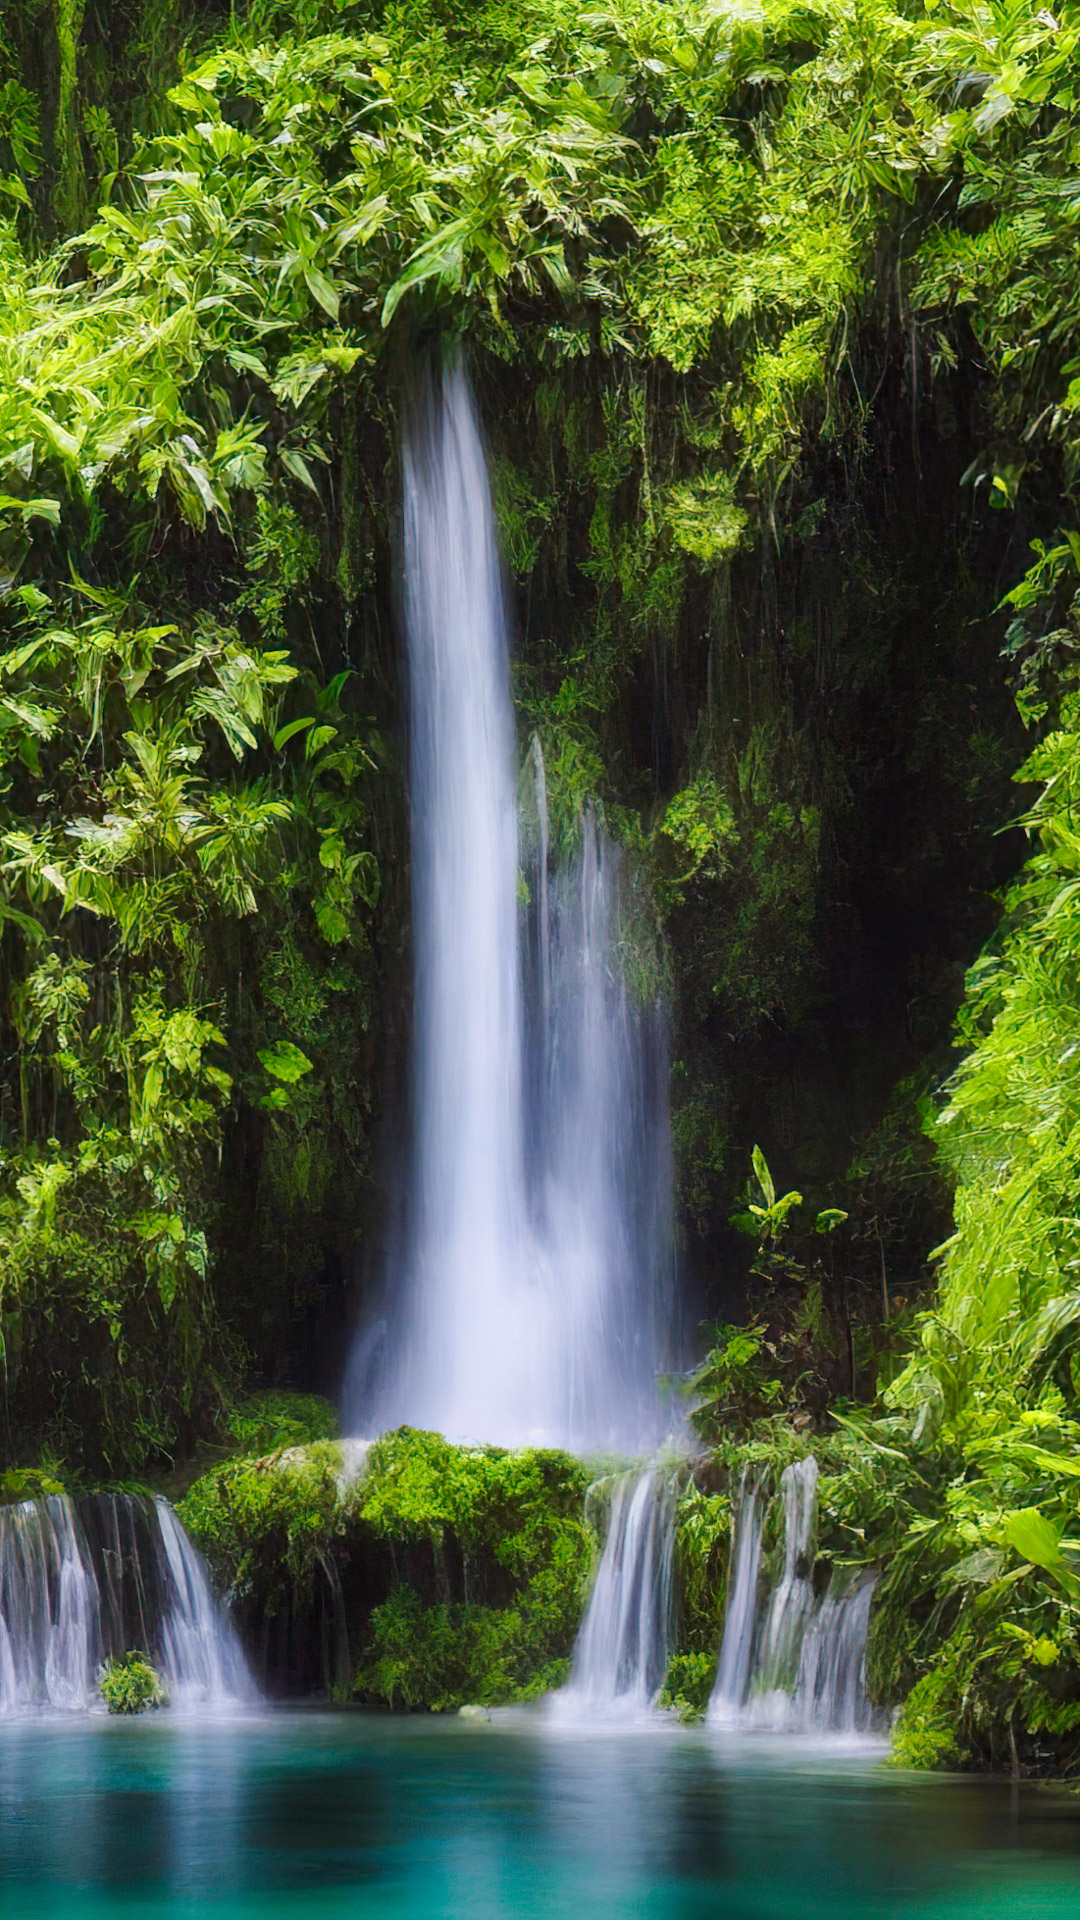 Experience our high-resolution nature wallpaper, featuring an enchanting waterfall hidden deep in the lush, emerald-green rainforest.